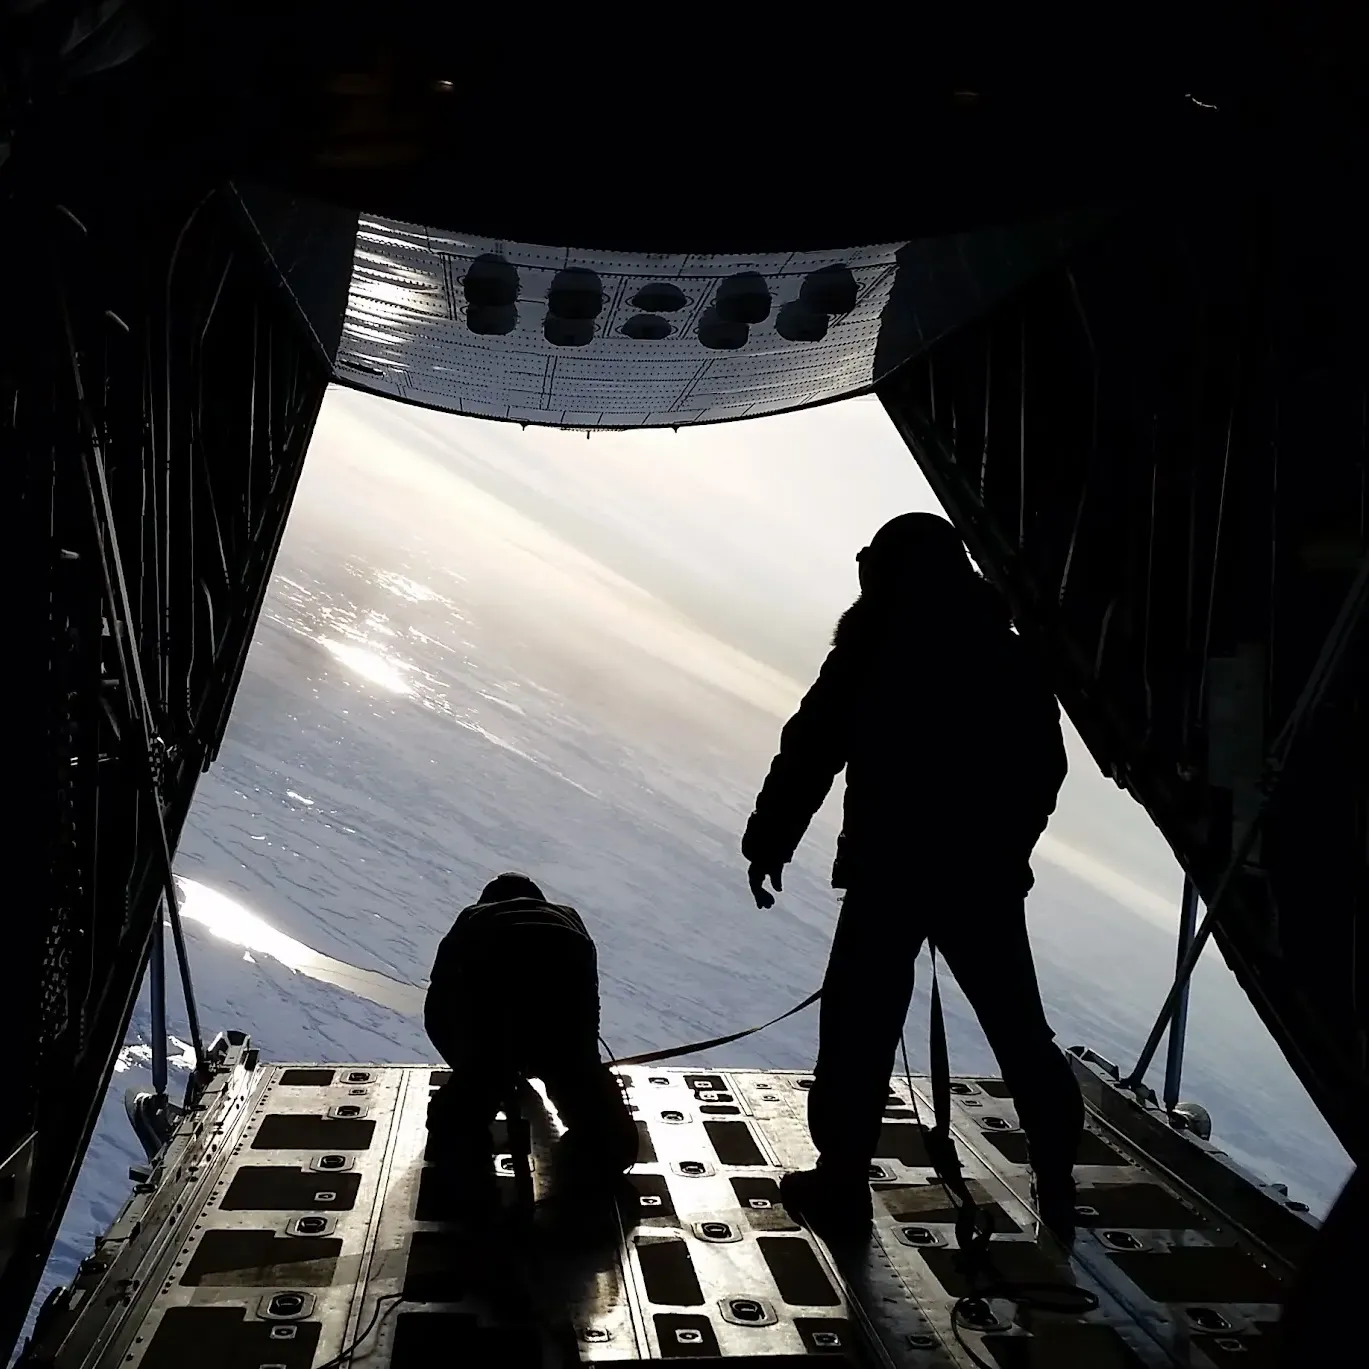 Steenson和另一个人站在飞机的出口，俯瞰着冰面